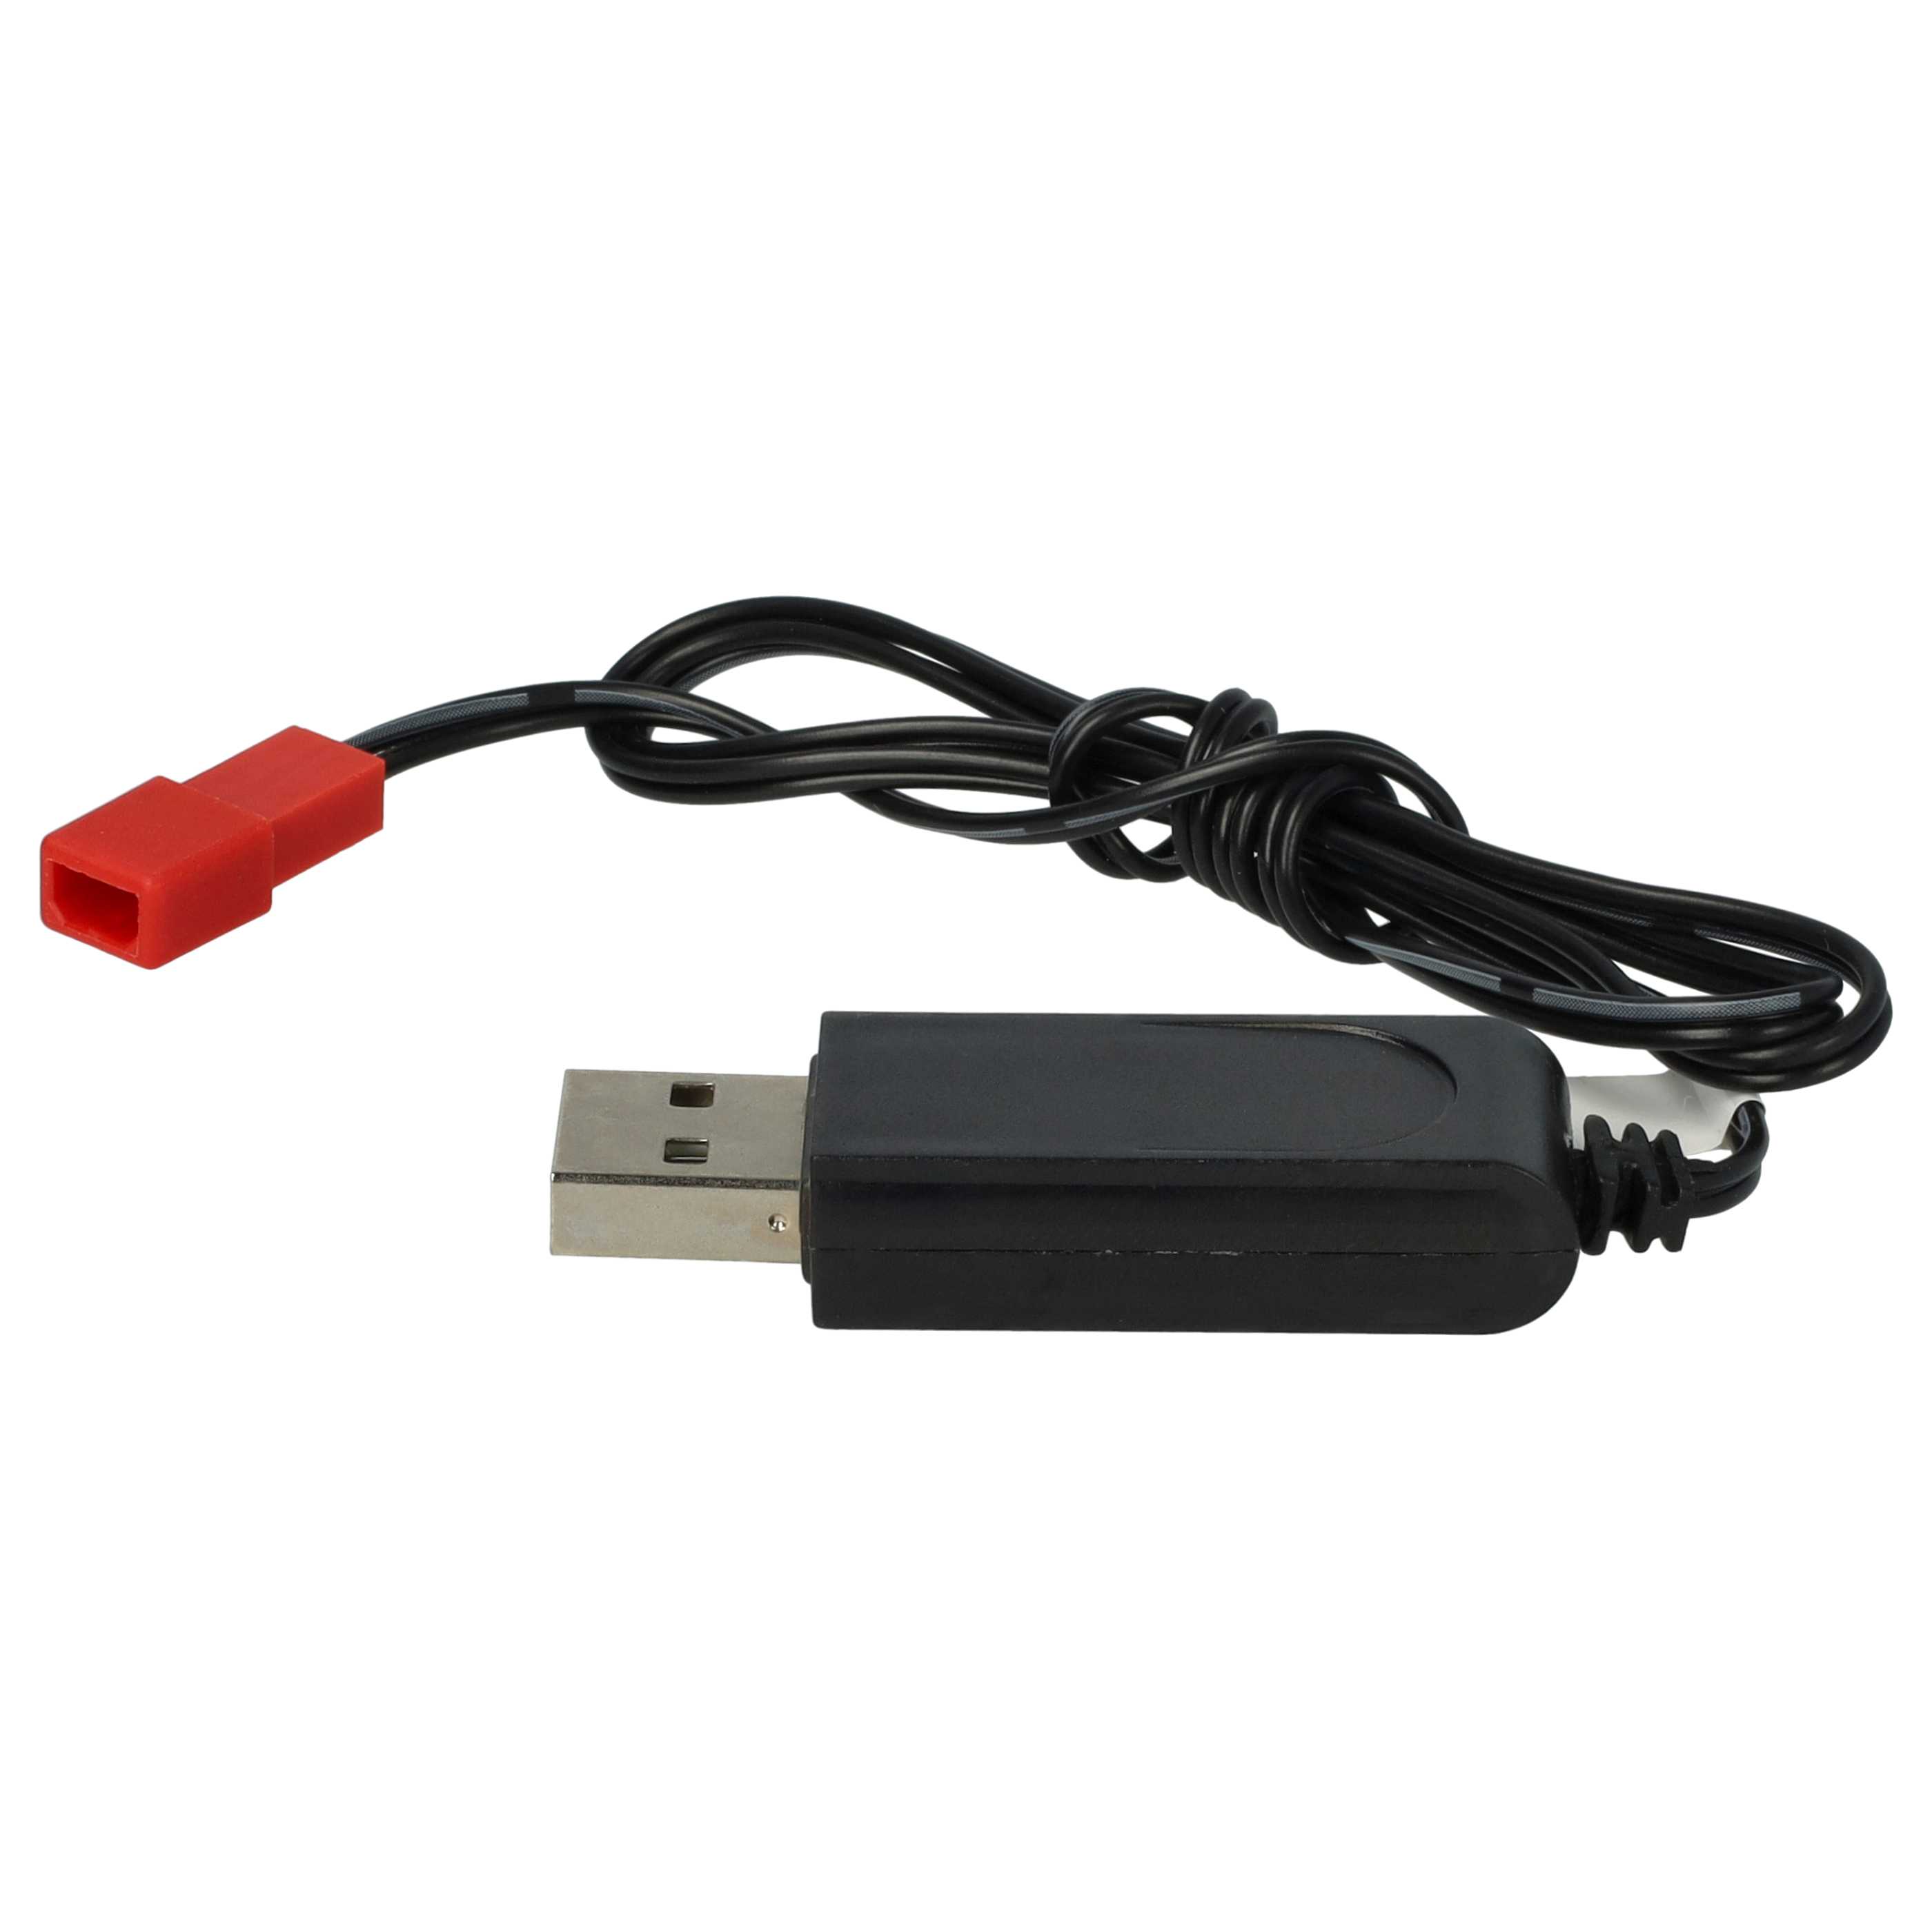 USB-Ladekabel passend für RC-Akkus mit JST-Anschluss, RC-Modellbau Akkupacks - 60cm 4,8V